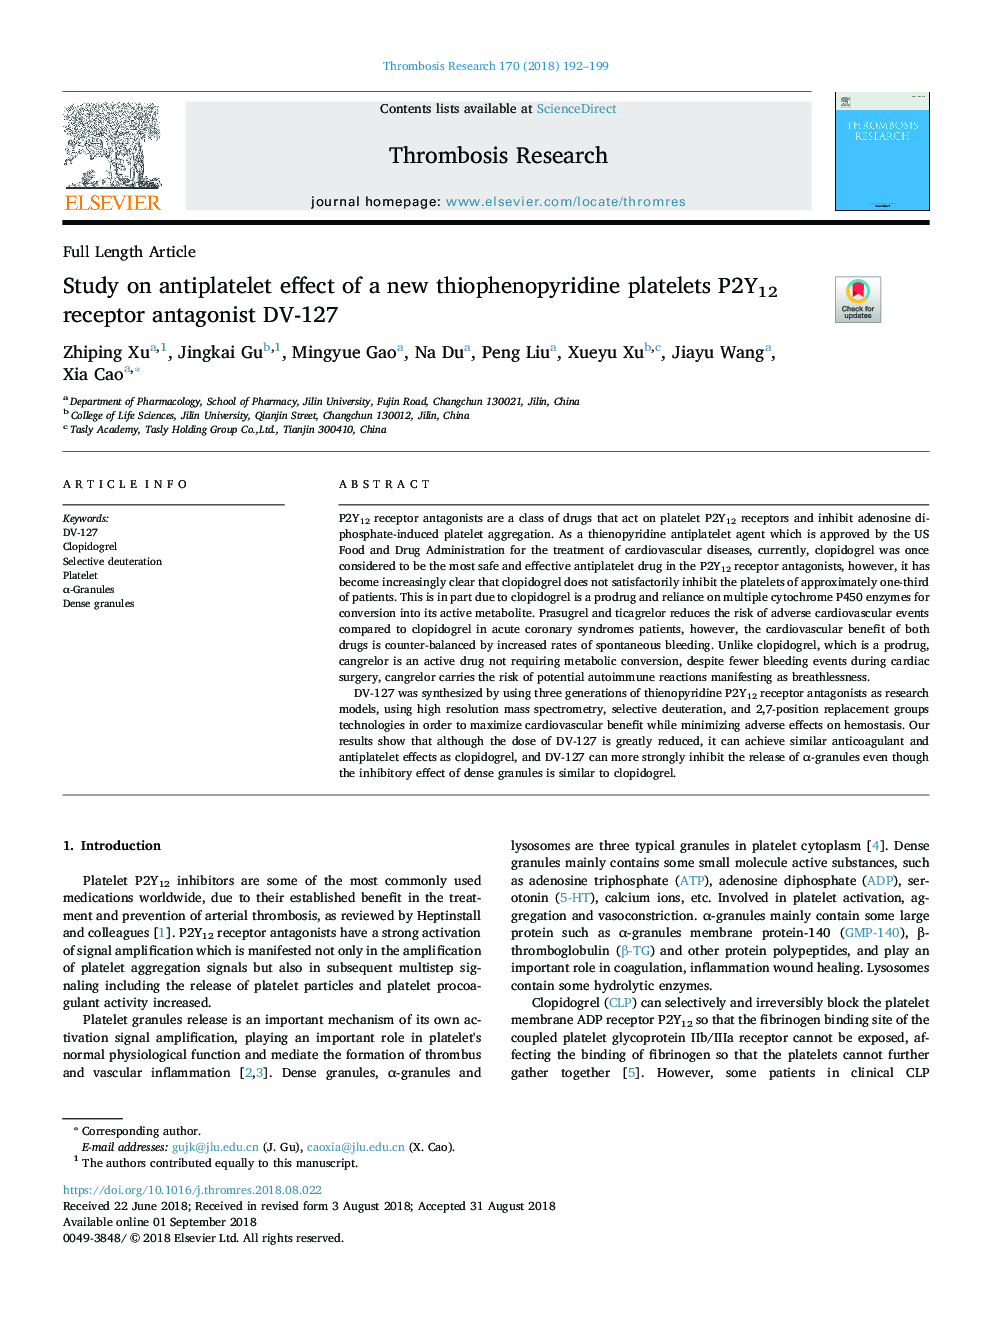 Study on antiplatelet effect of a new thiophenopyridine platelets P2Y12 receptor antagonist DV-127